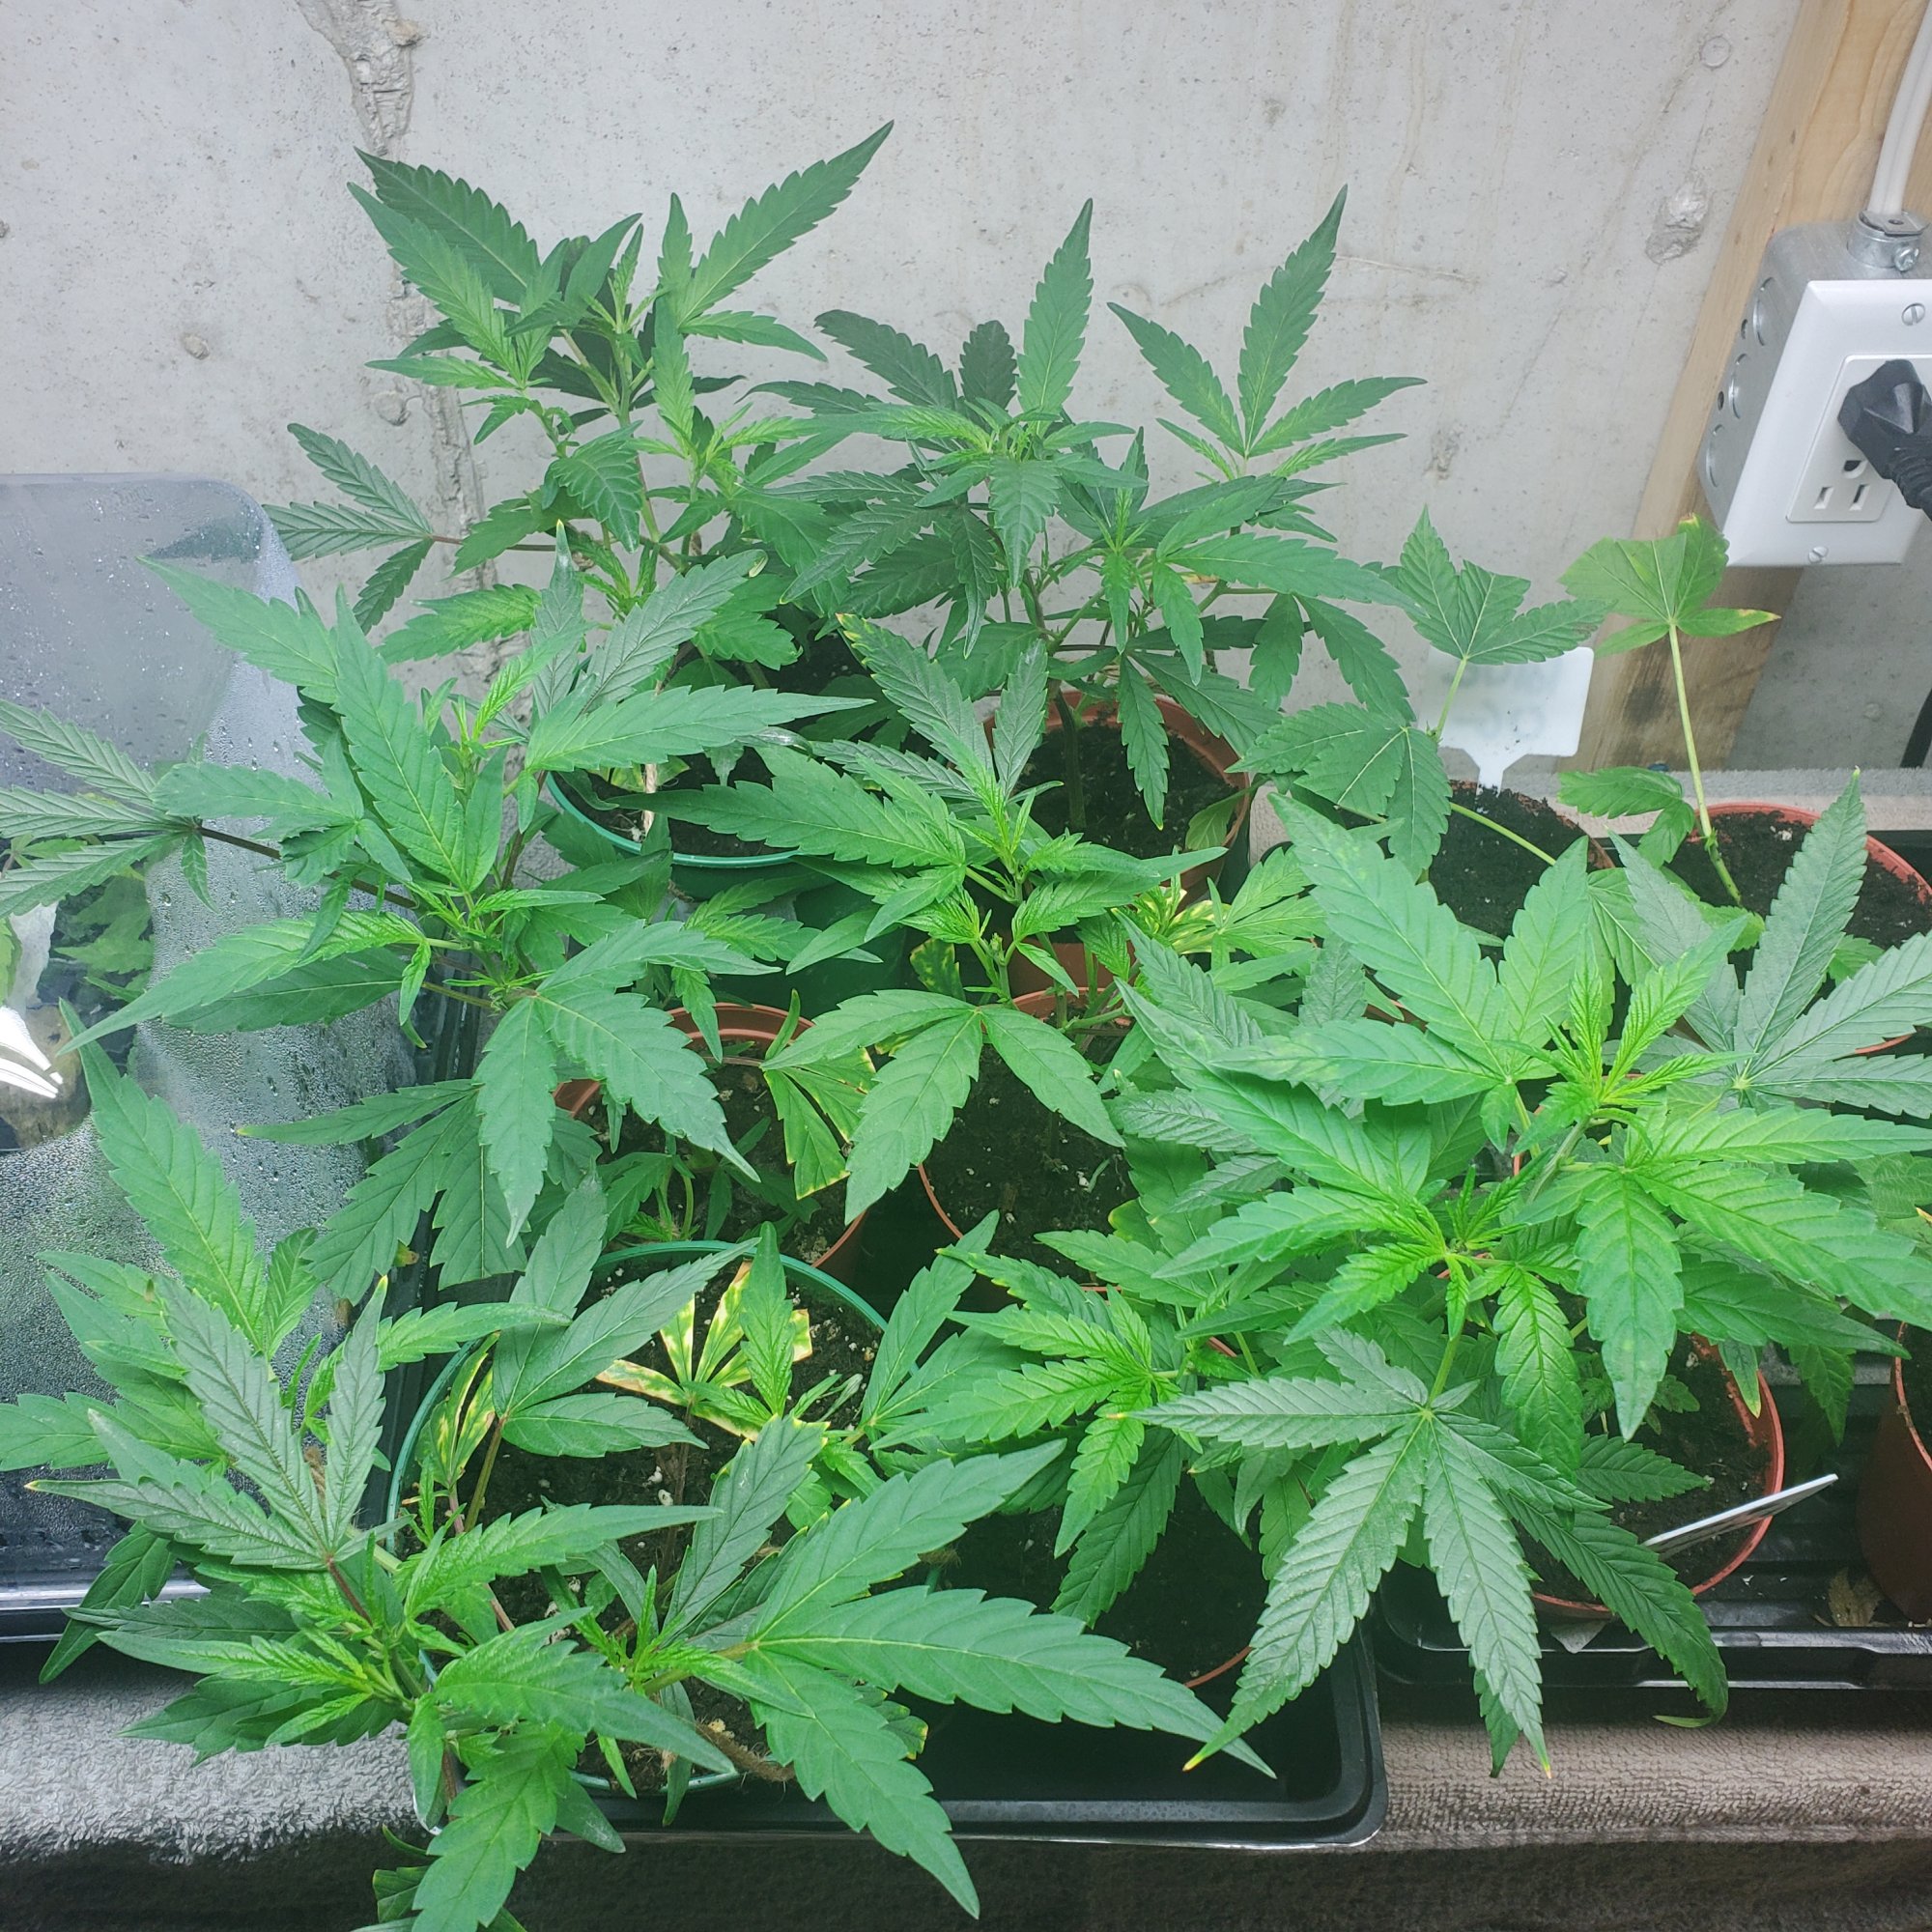 I need advice on growing mother plants 3